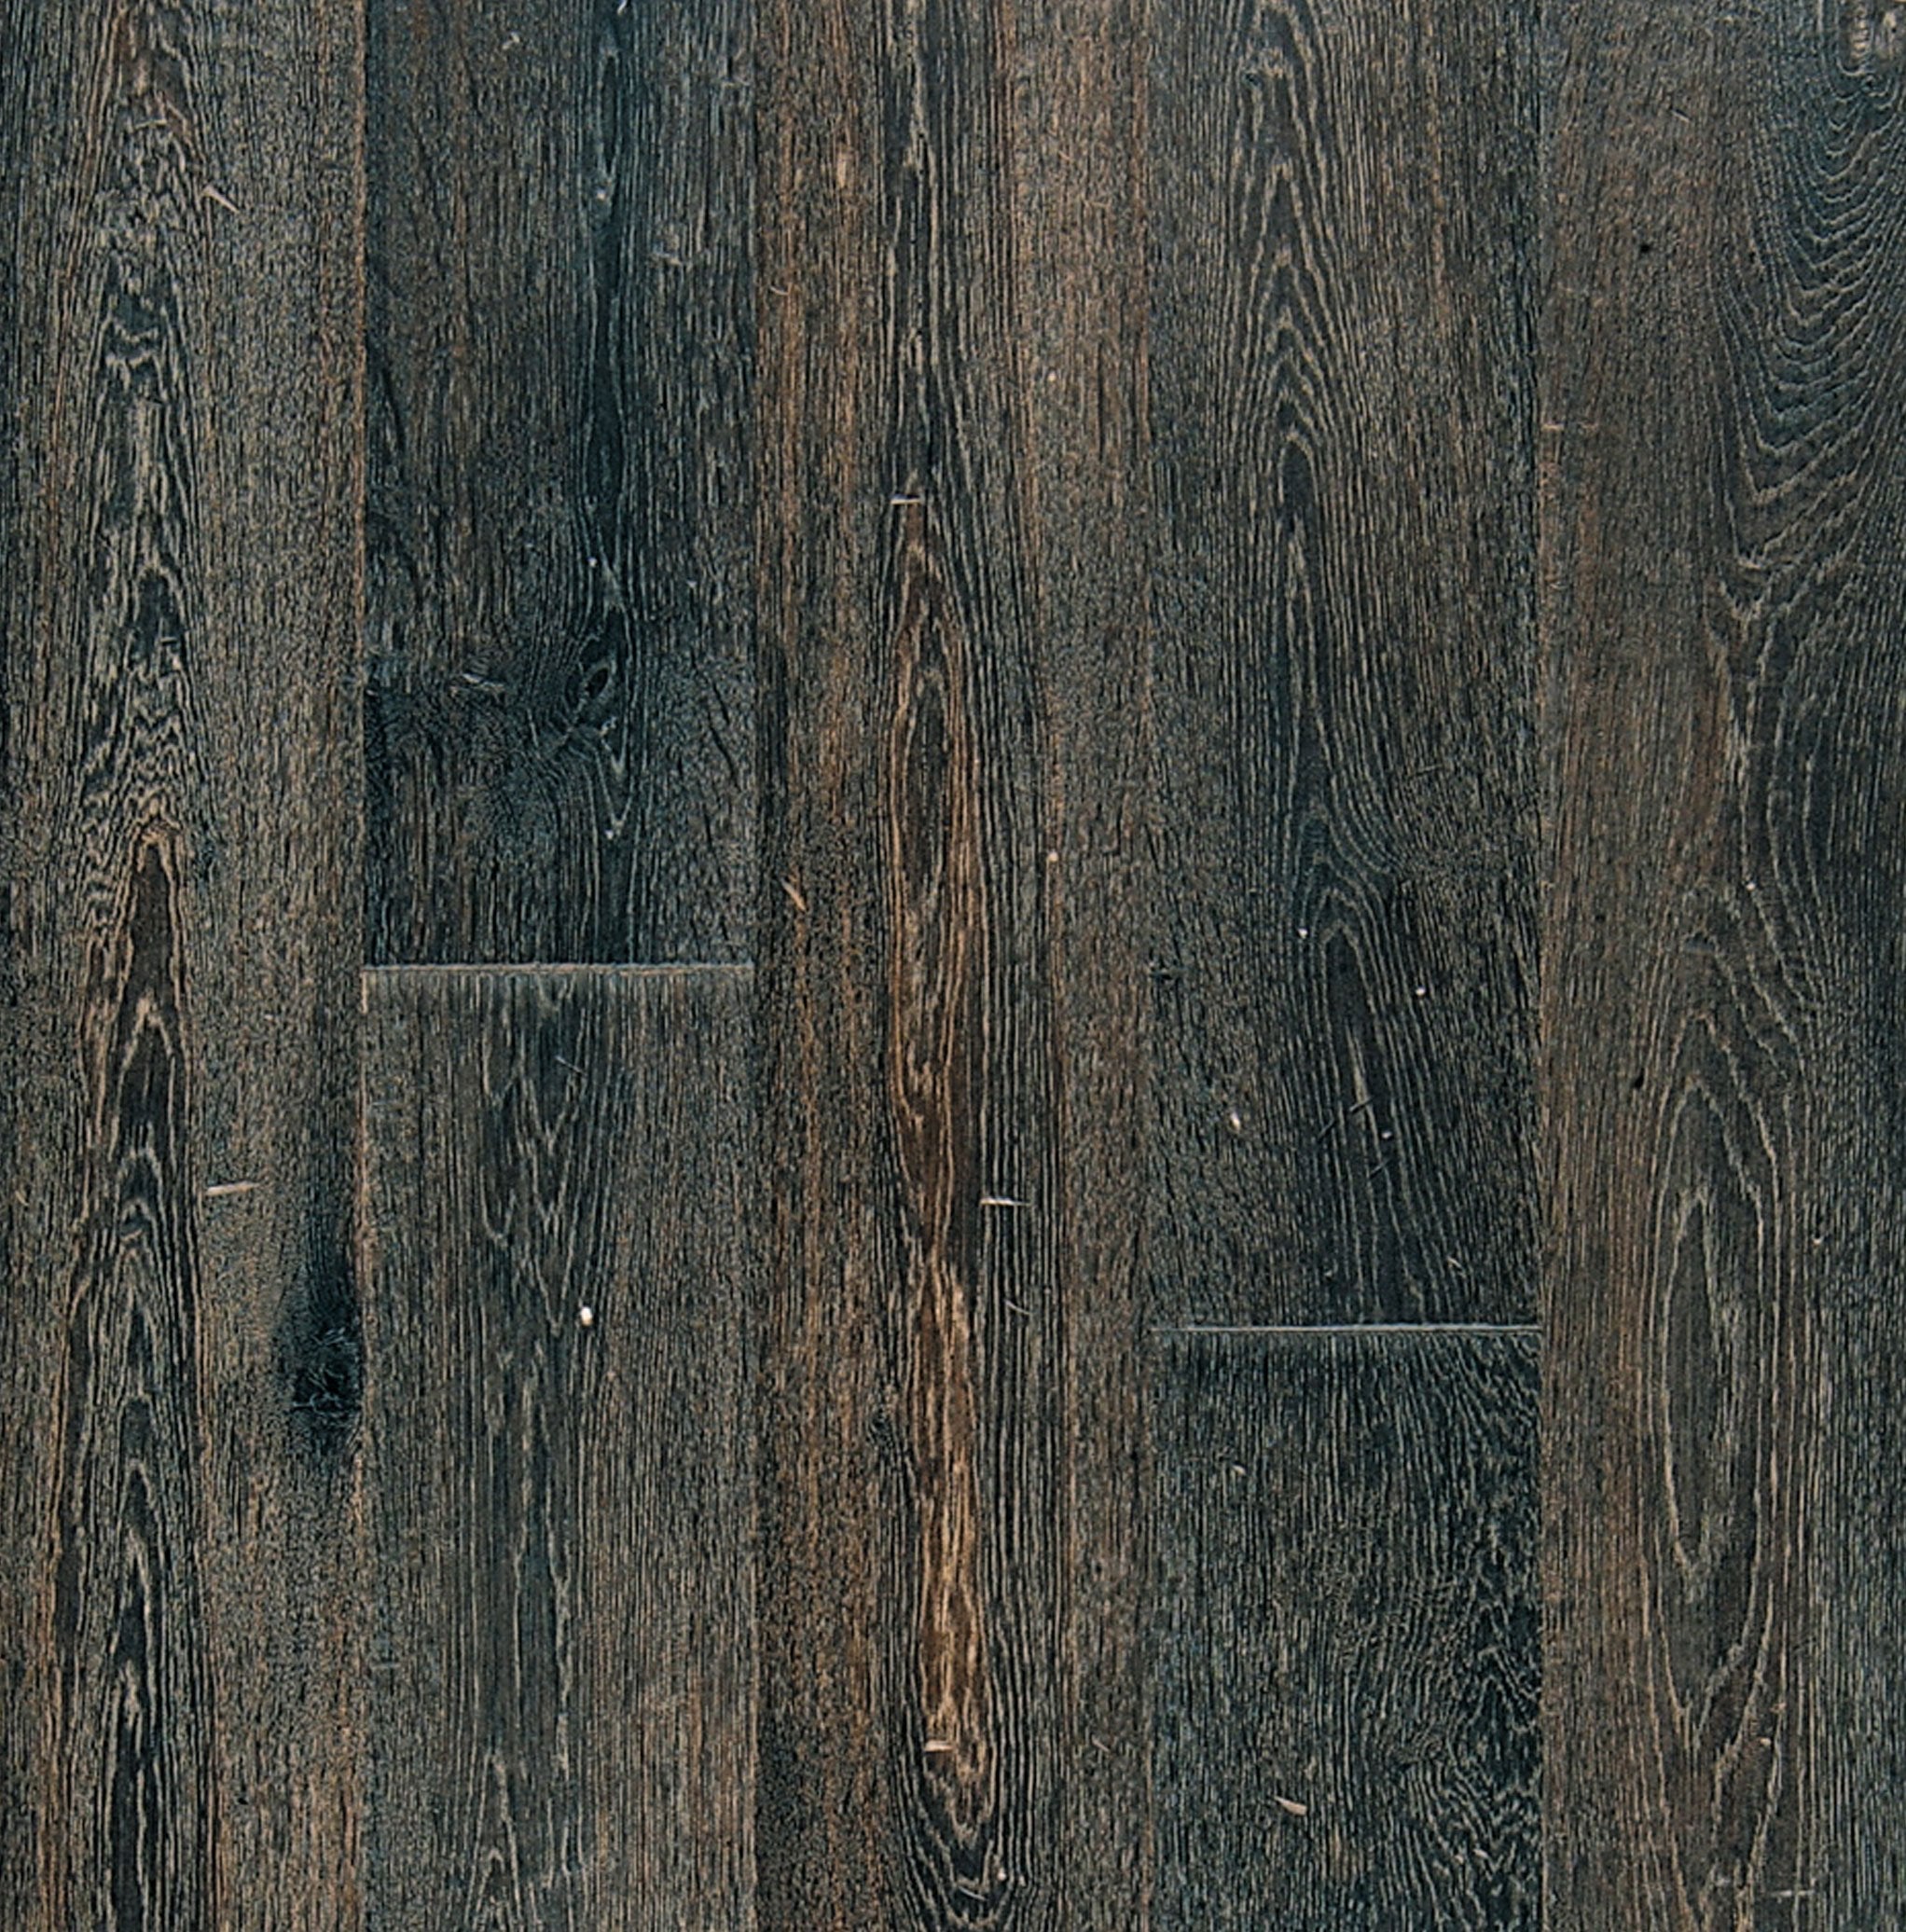 teka antique ebony german french white oak natural hardwood flooring plank fumed smoke distributed by surface group international